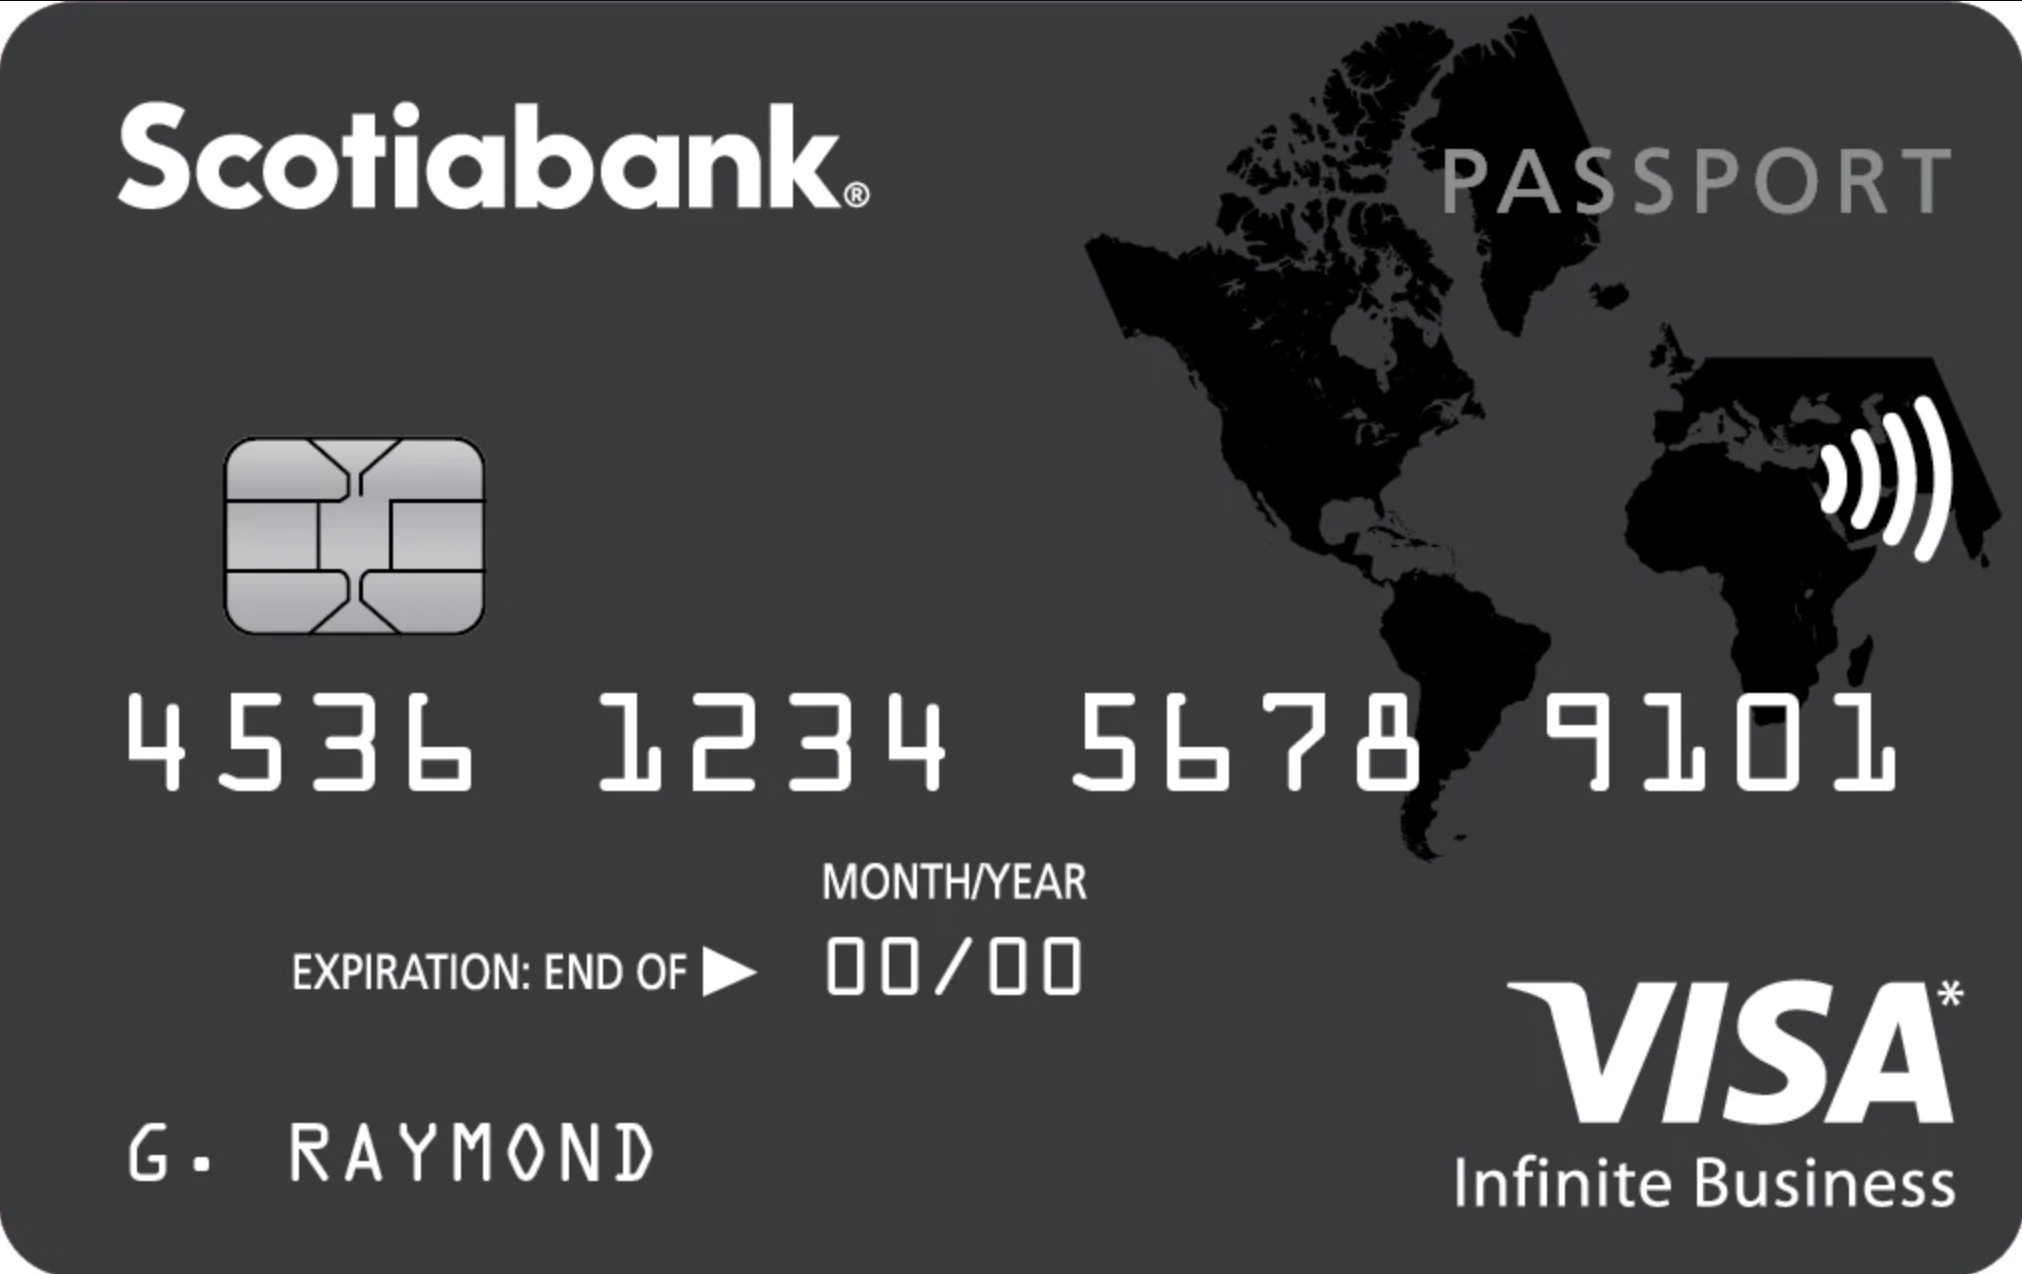 Scotiabank Passport™ Visa Infinite Business Card